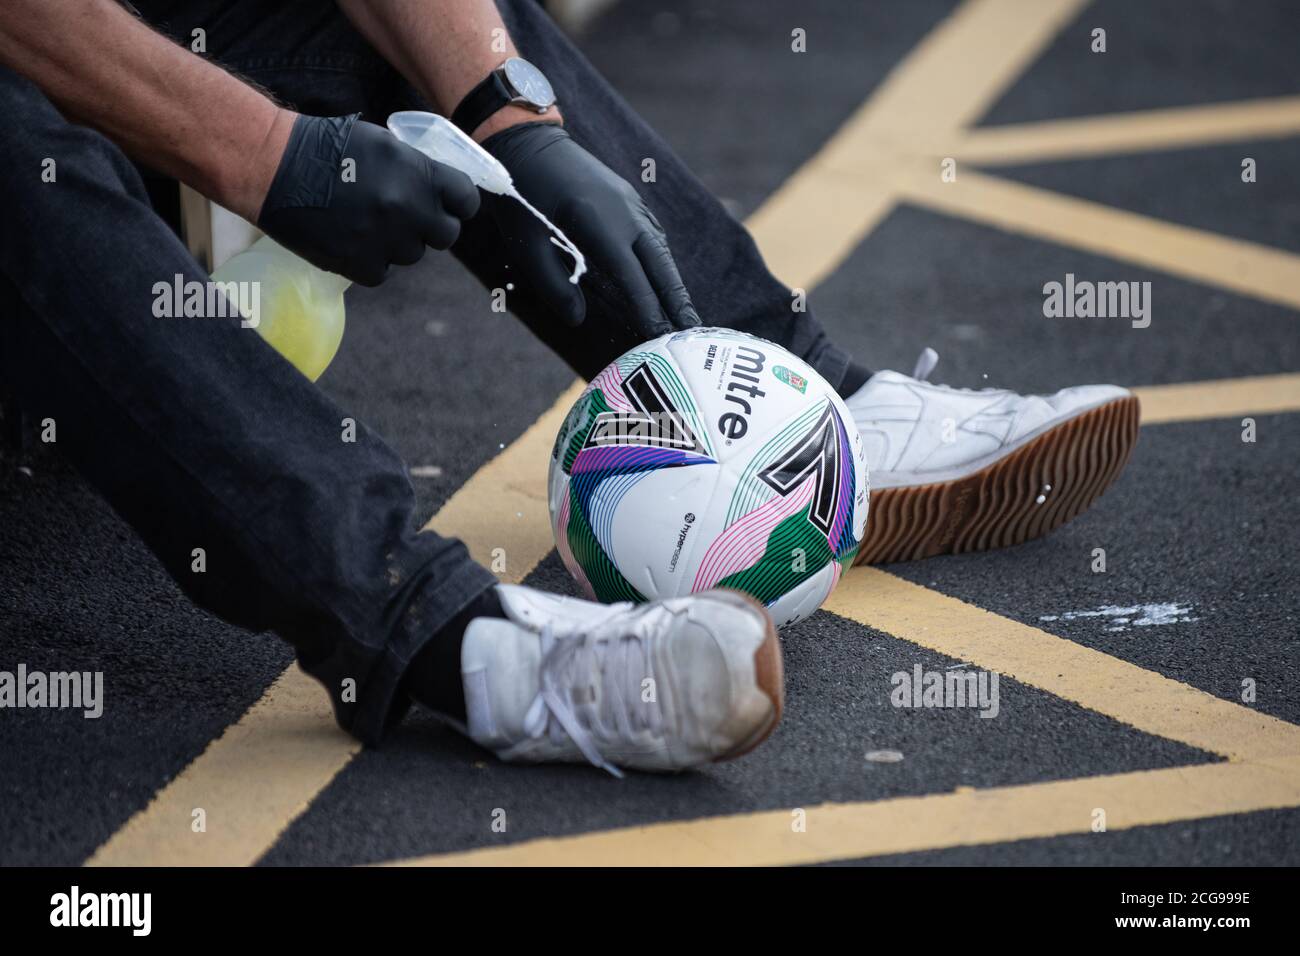 Steward sanitising football during coronavirus pandemic 2020. Stock Photo